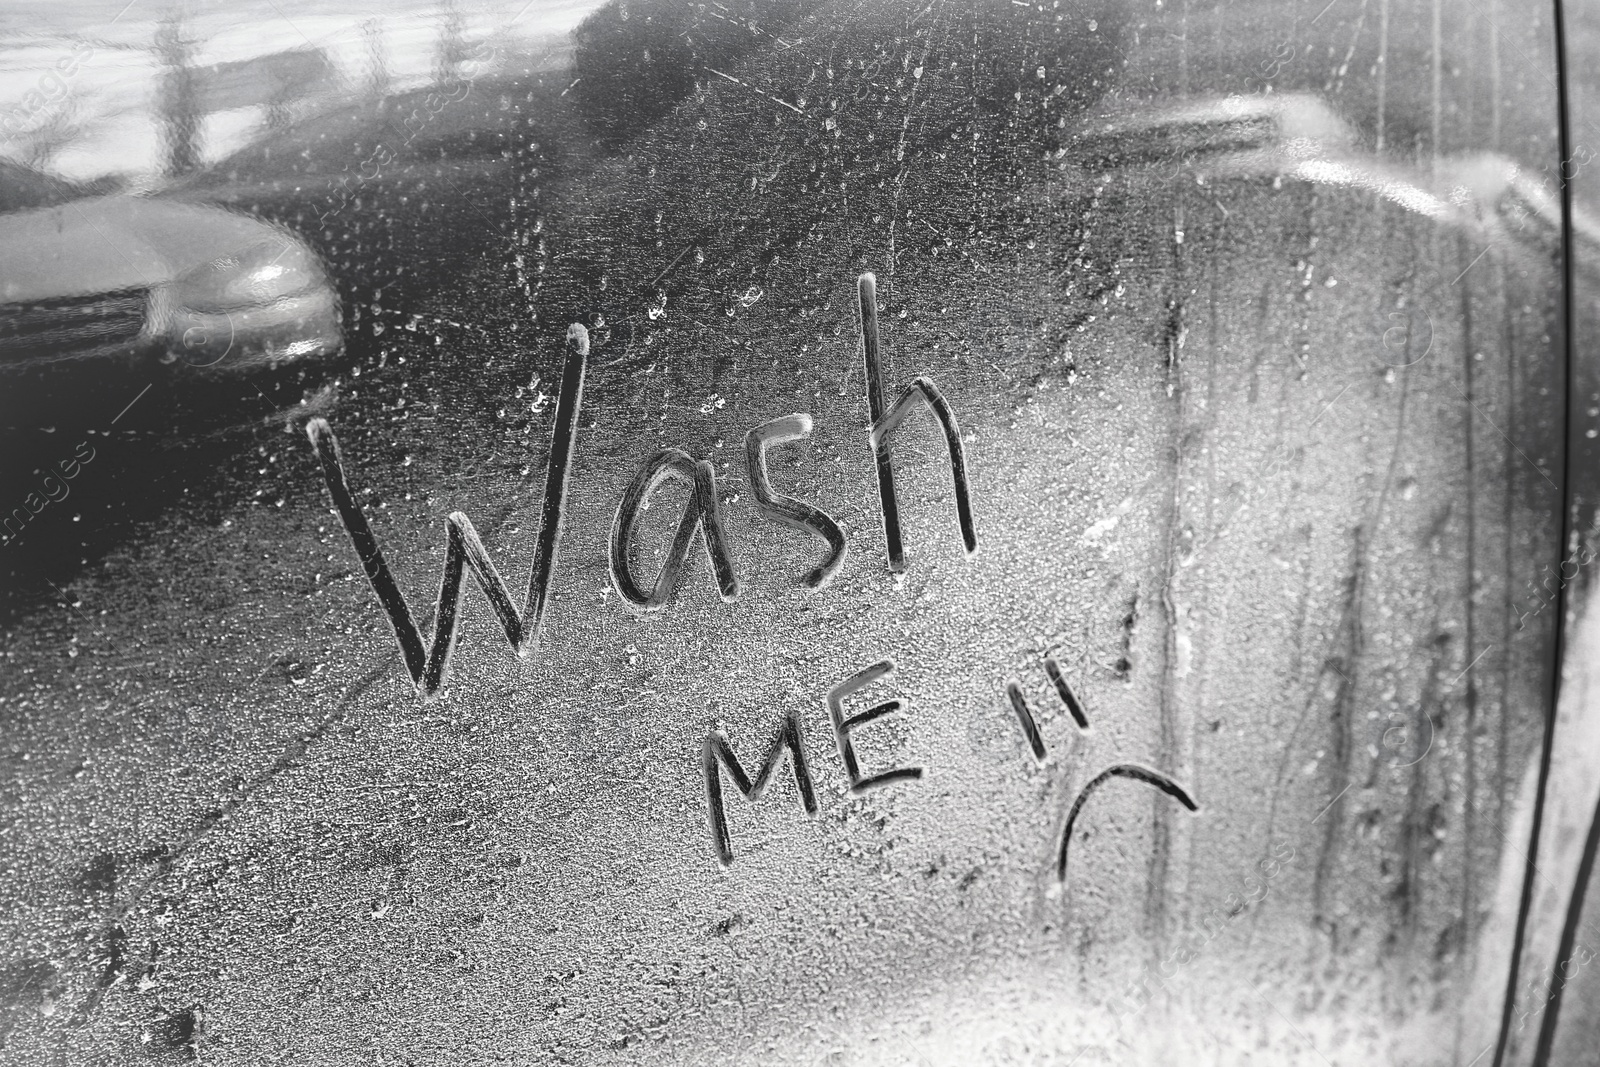 Photo of Inscription WASH ME and sad smiley on car door, closeup